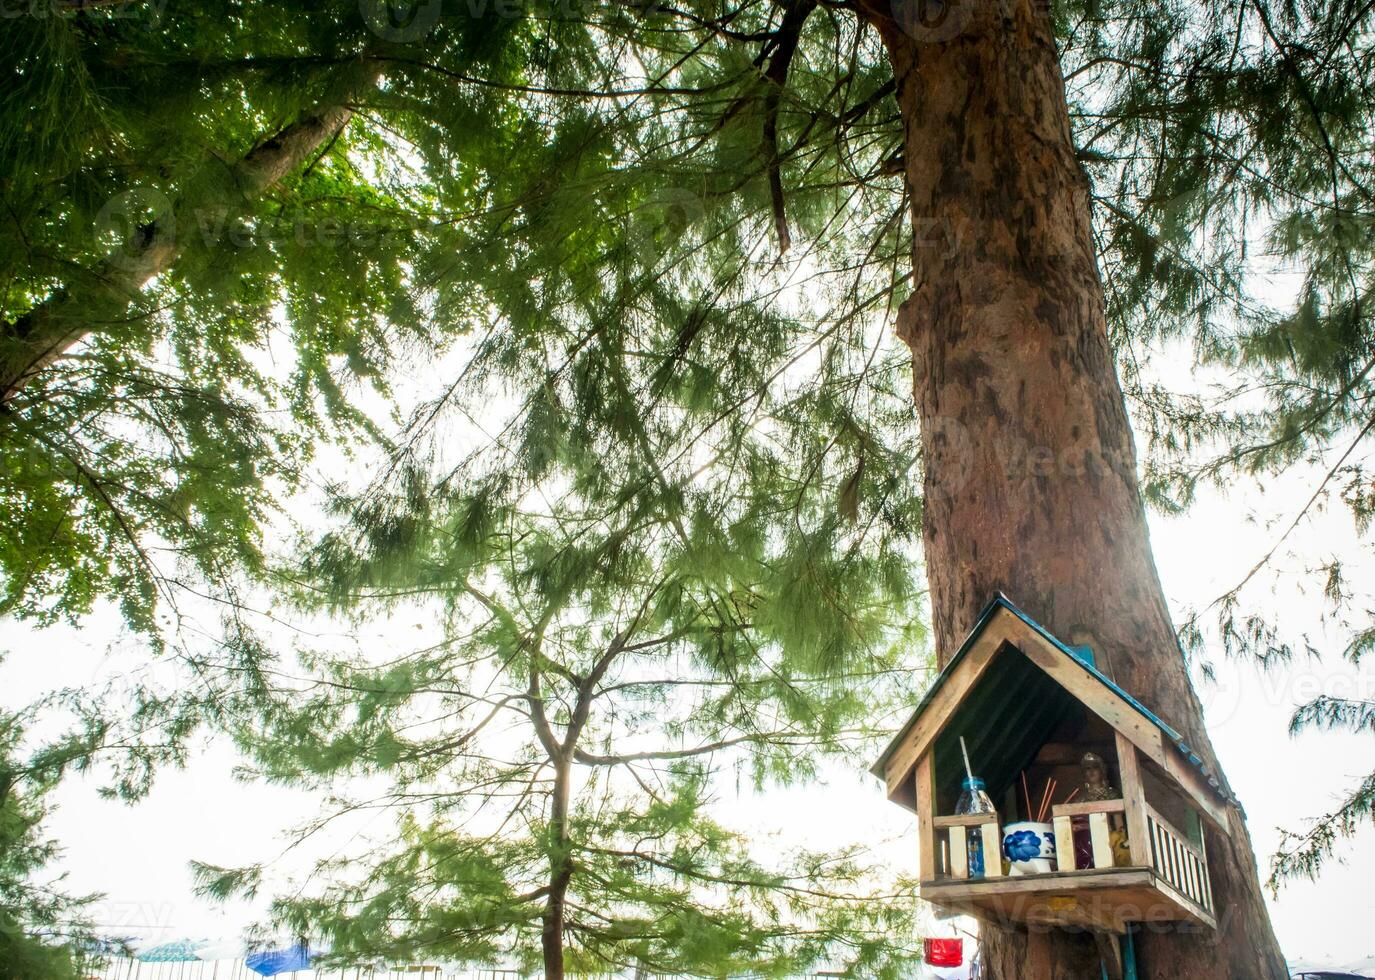 House of spirit on the big pine tree photo